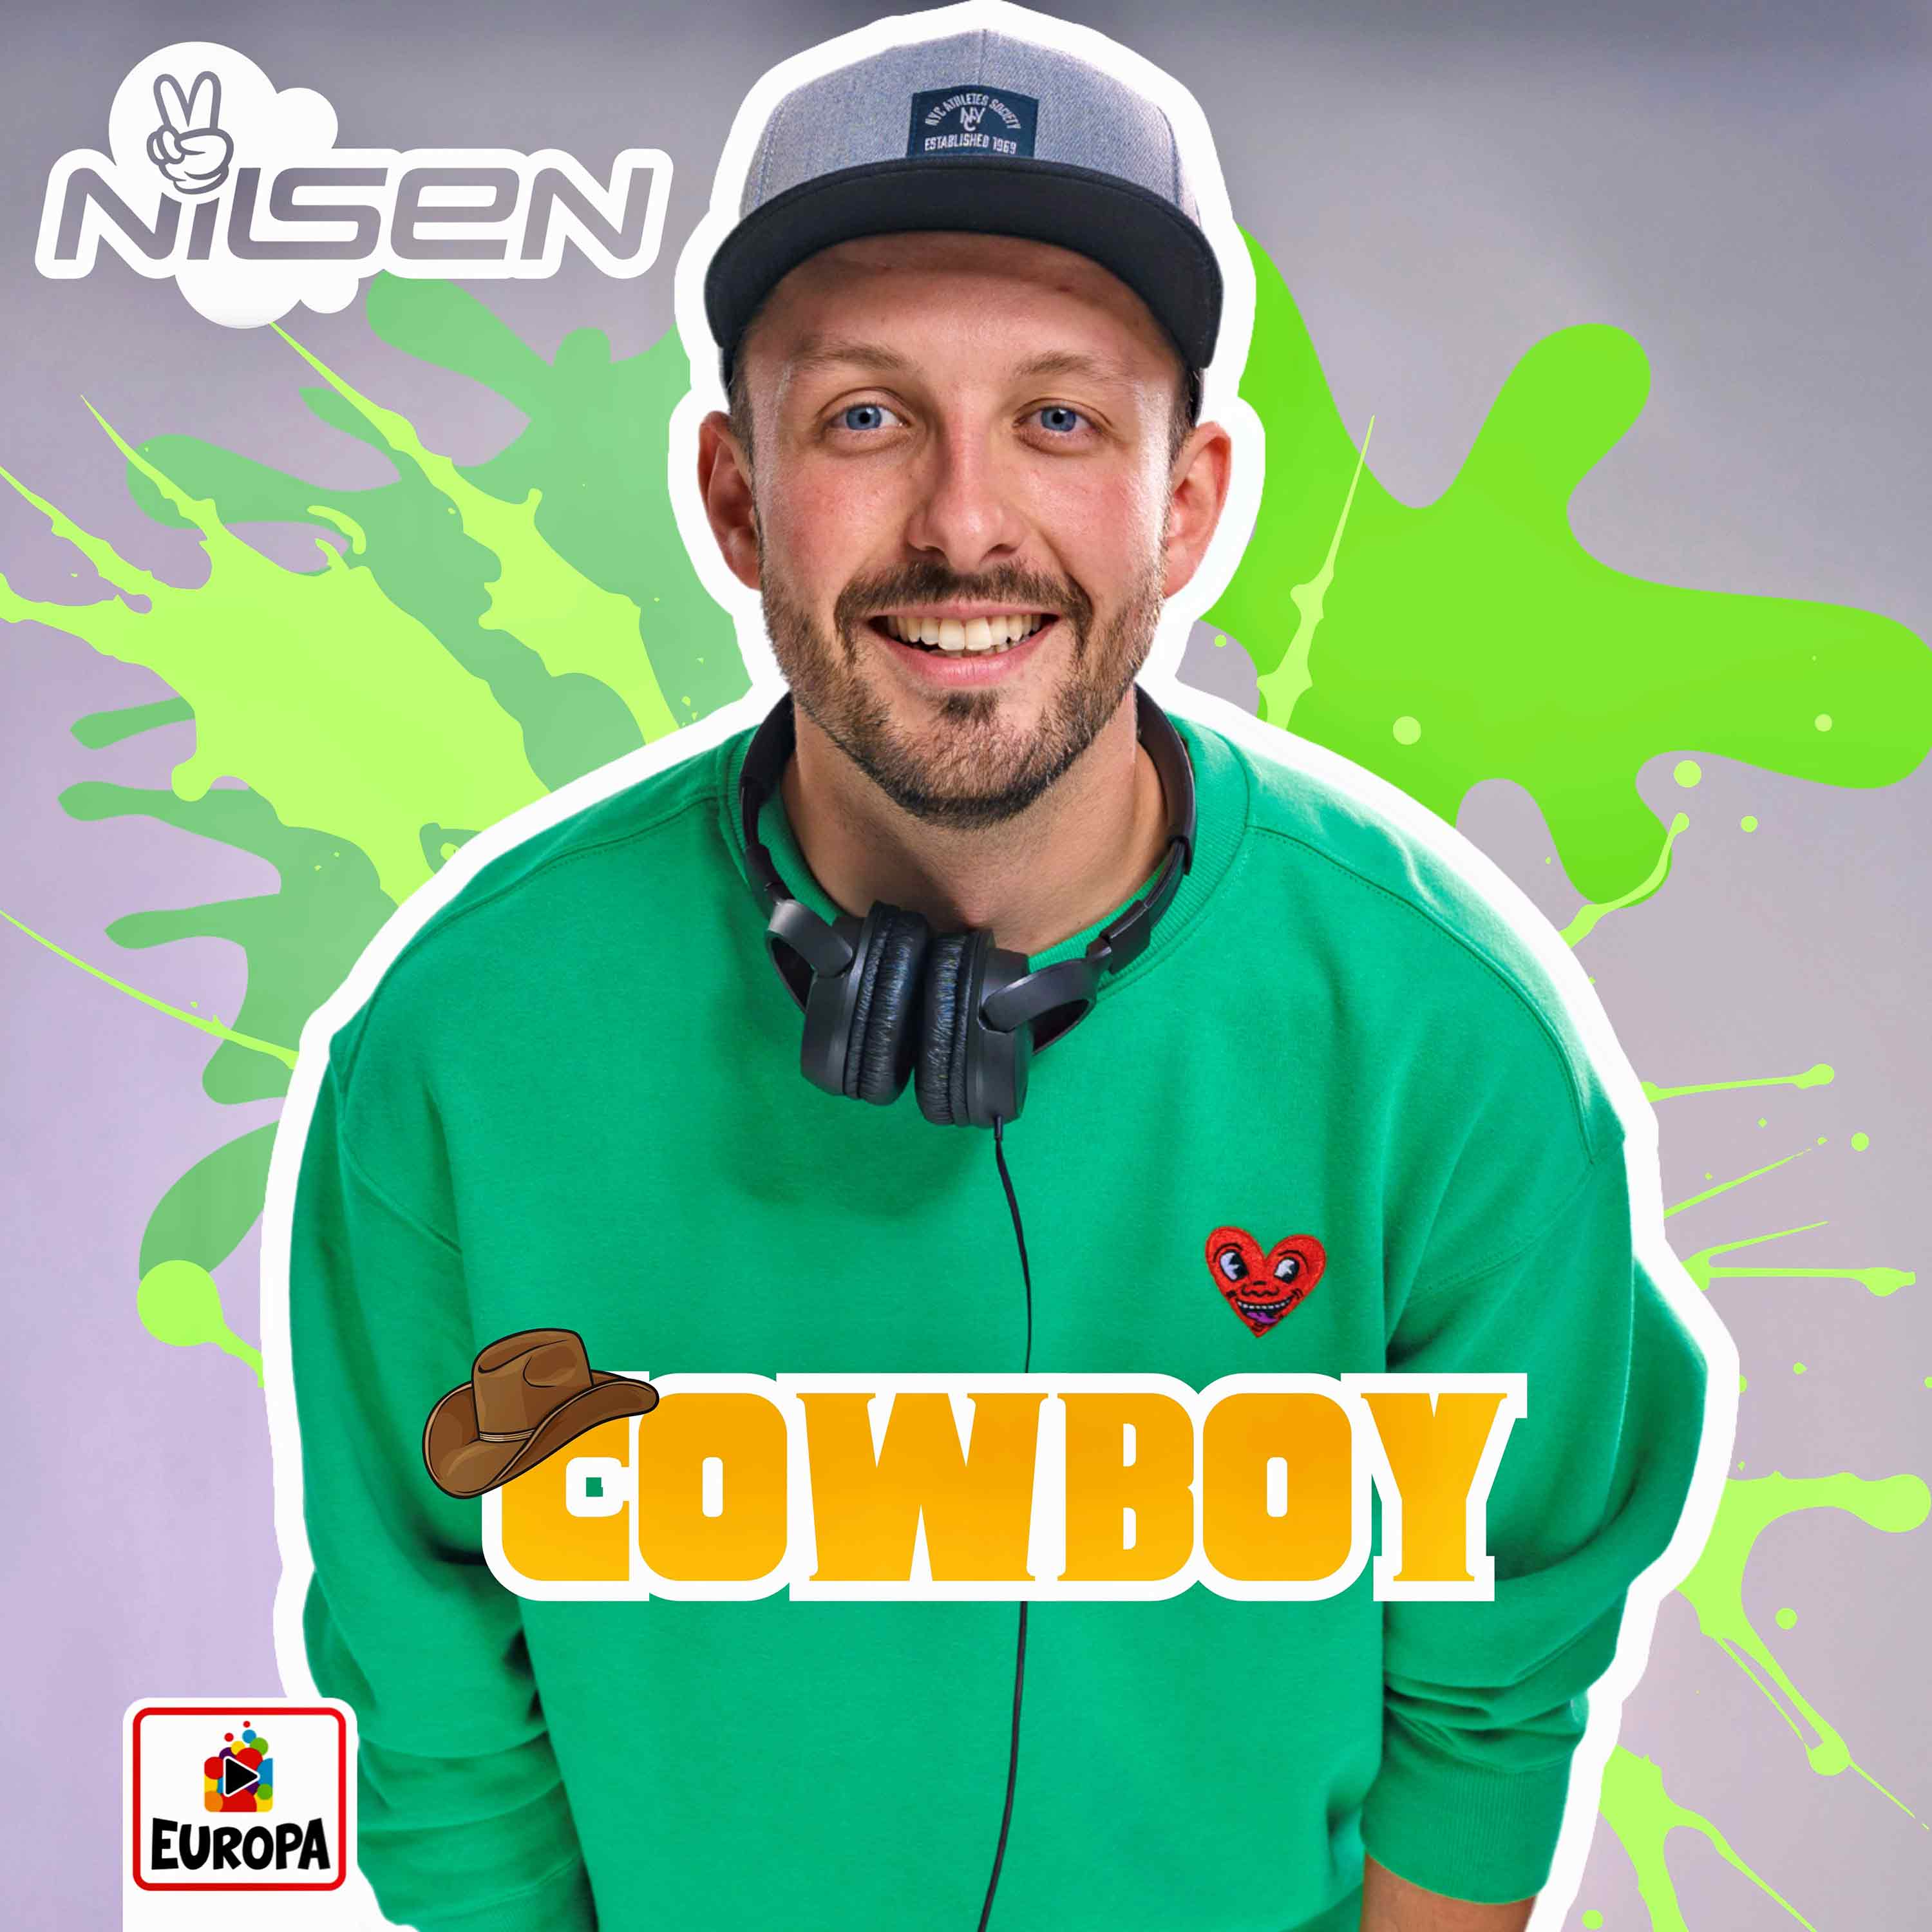 Nilsen: Cowboy